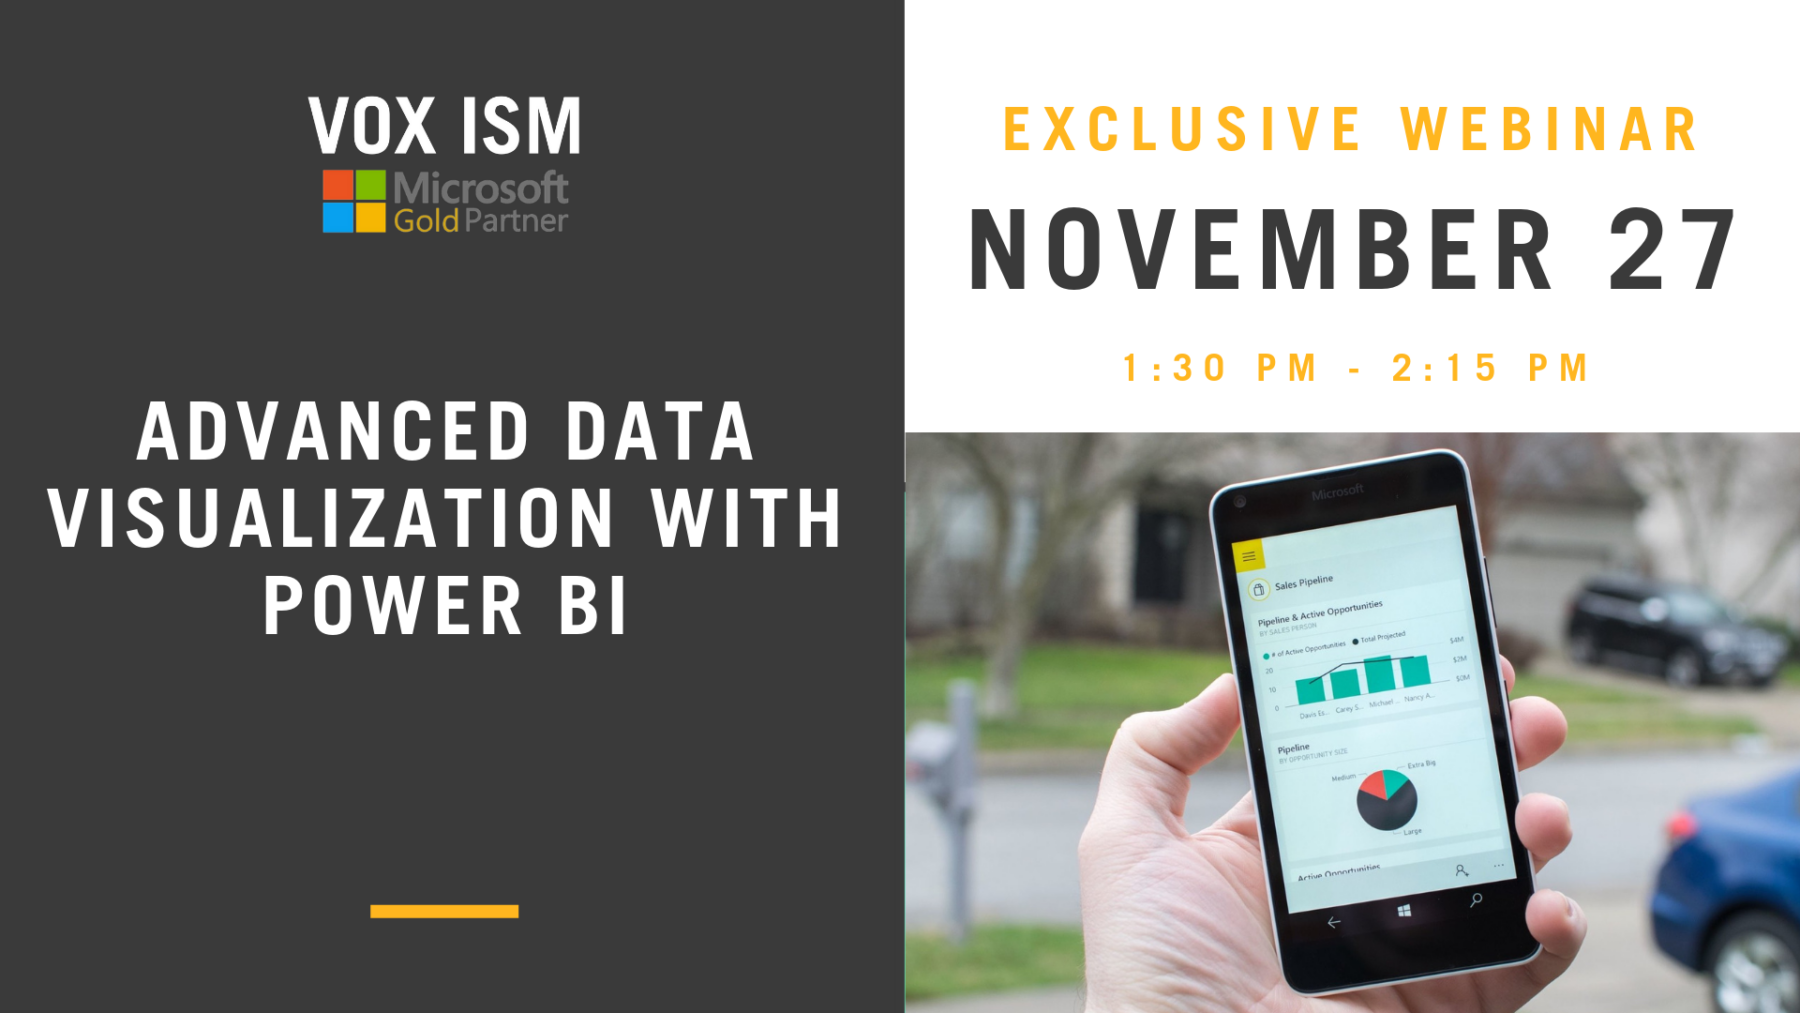 Advanced Data Visualization with Power BI - November 27 - Webinar - VOX ISM